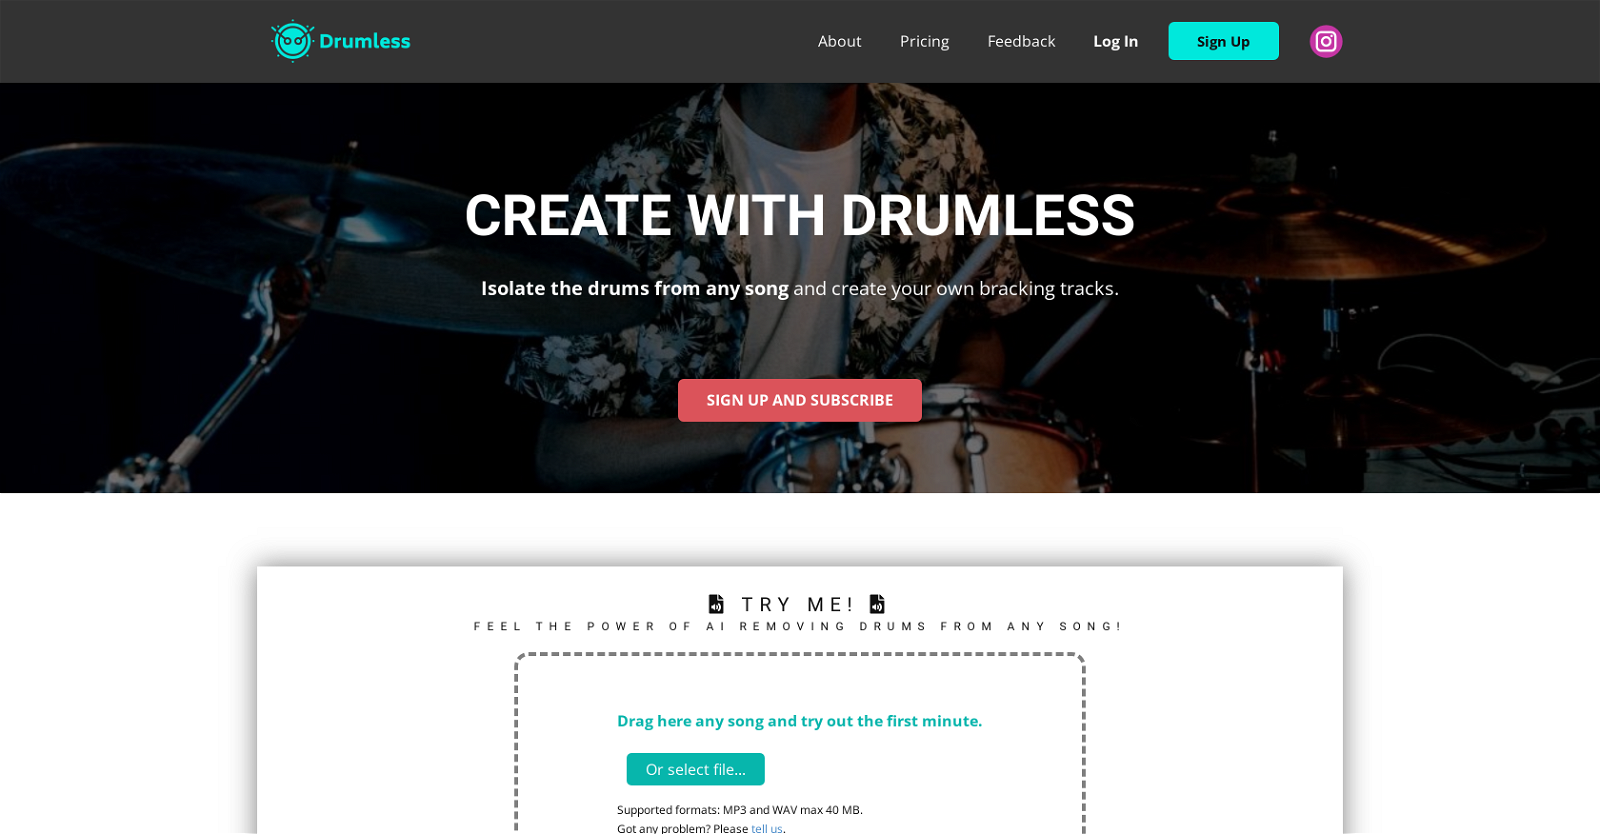 Drumless website